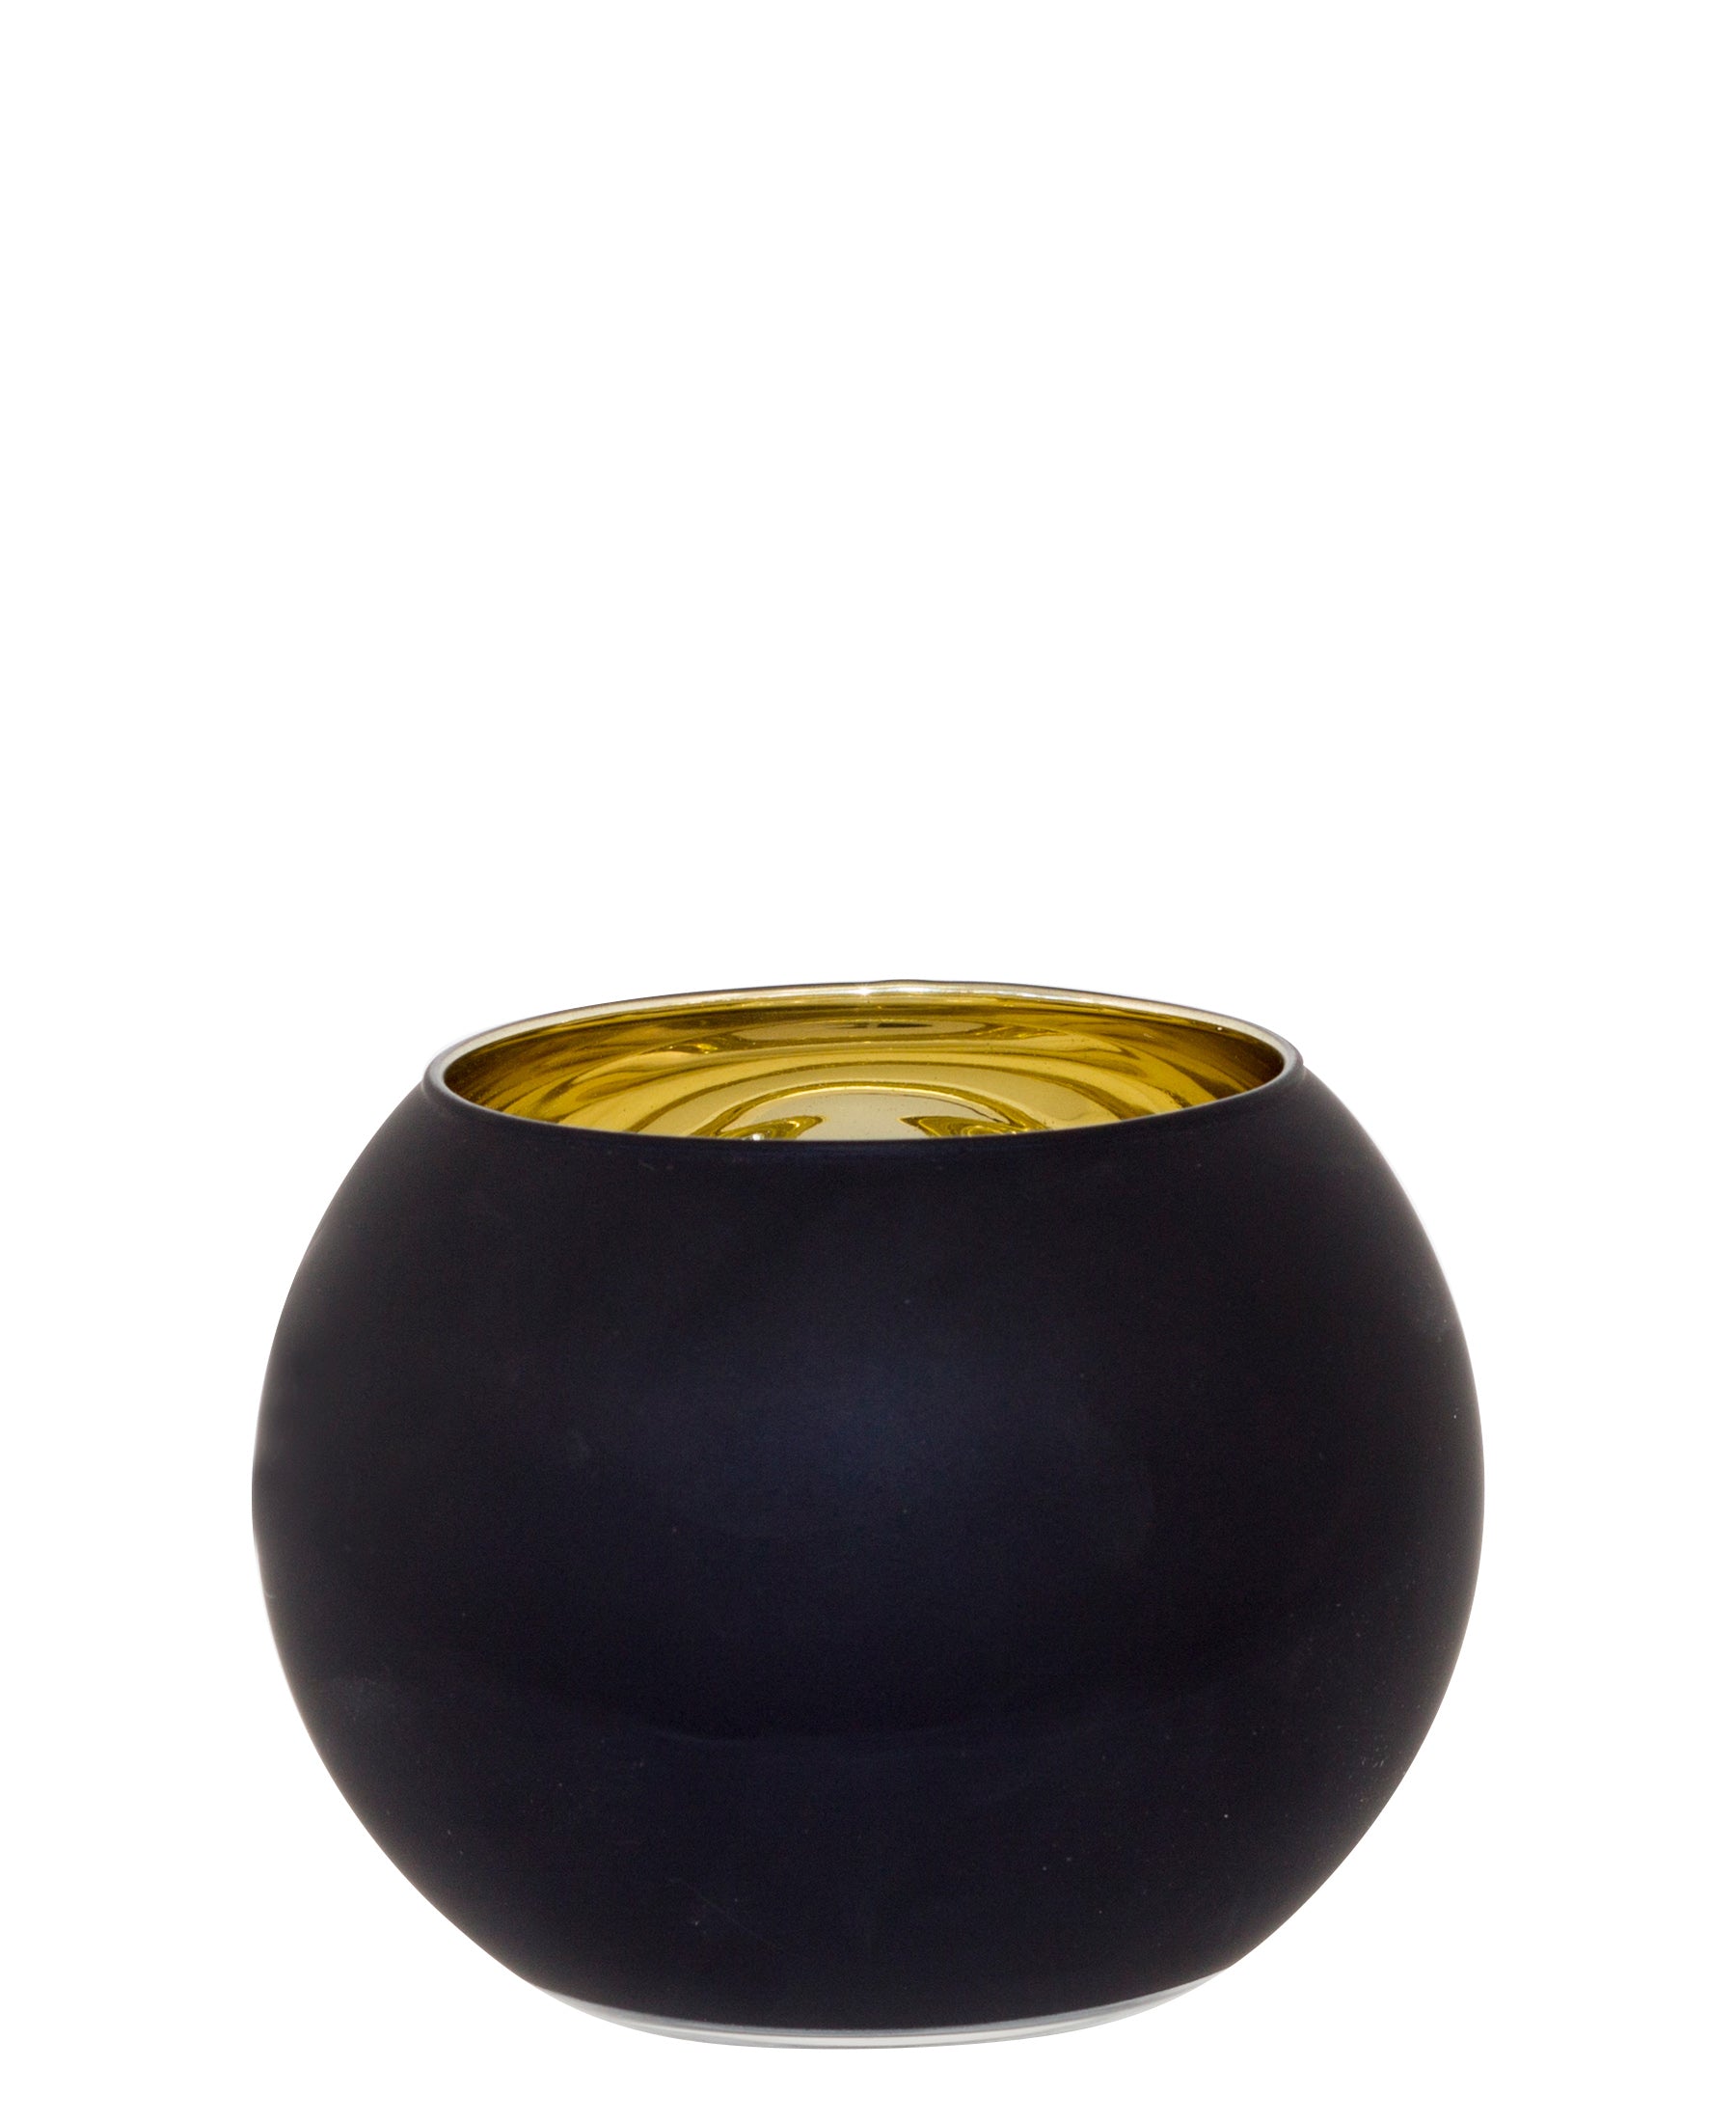 Urban Decor Bubble Ball Vase - Black & Gold